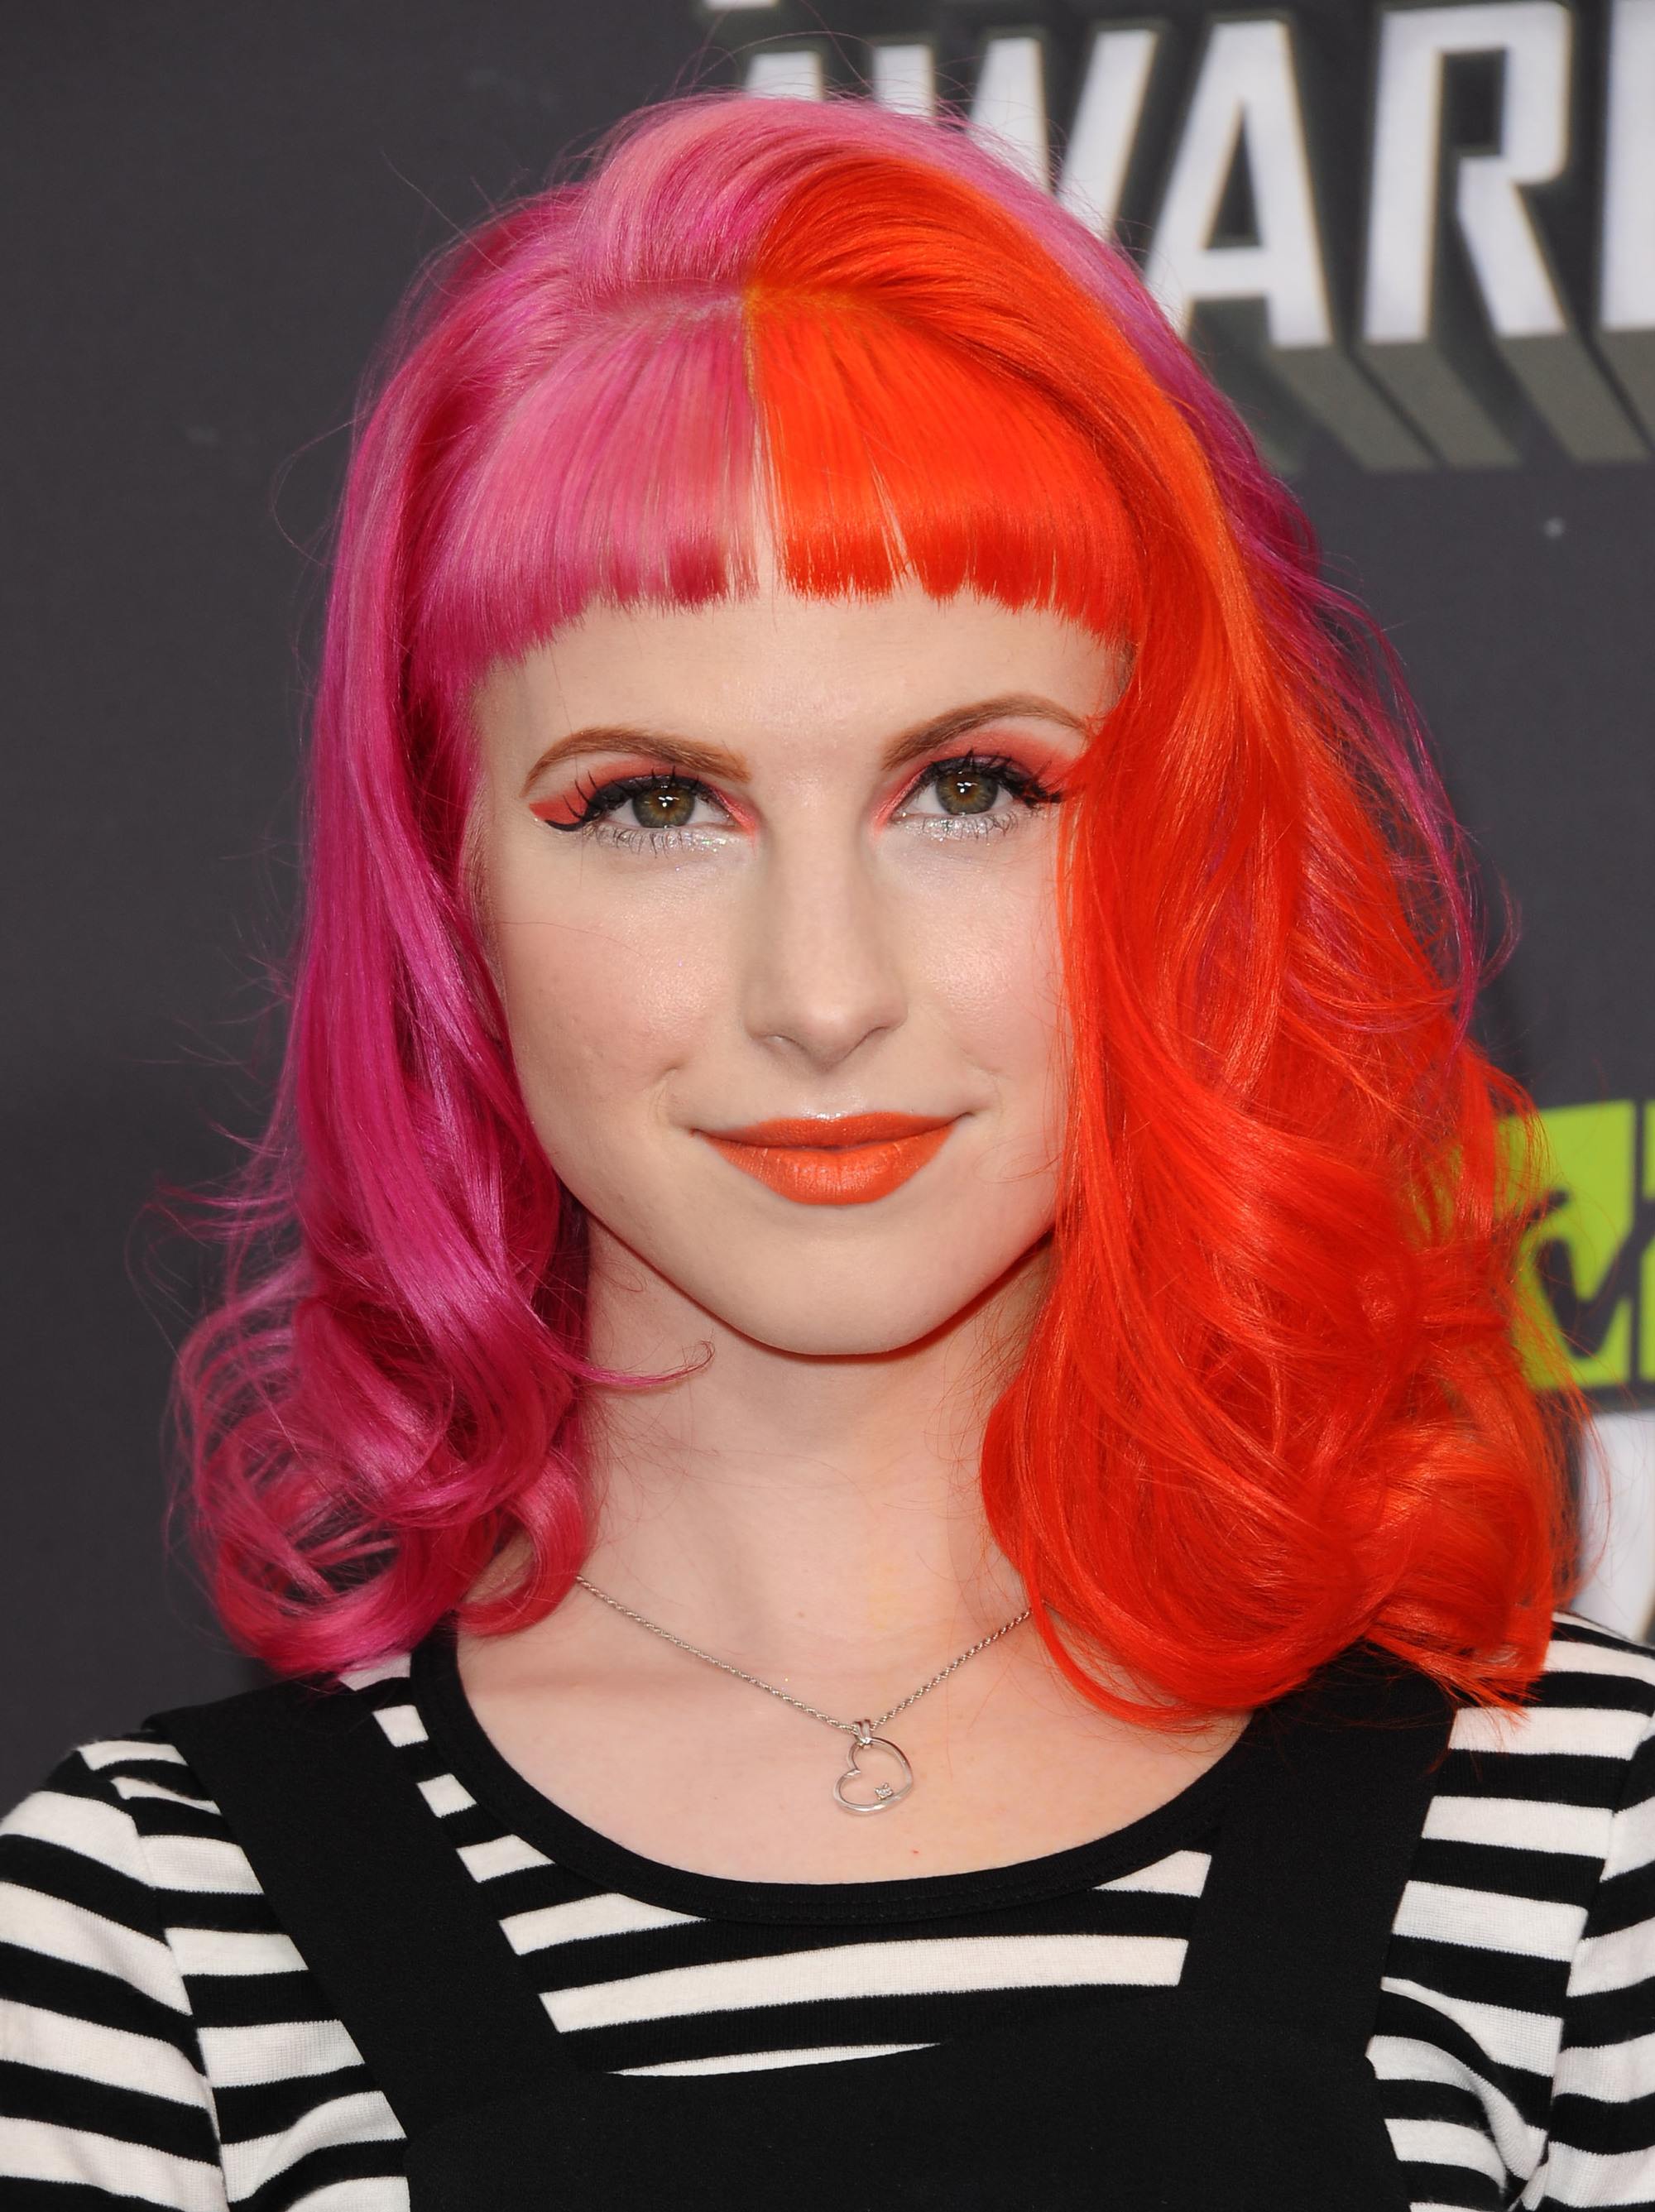 hayley williams pink and orange hair